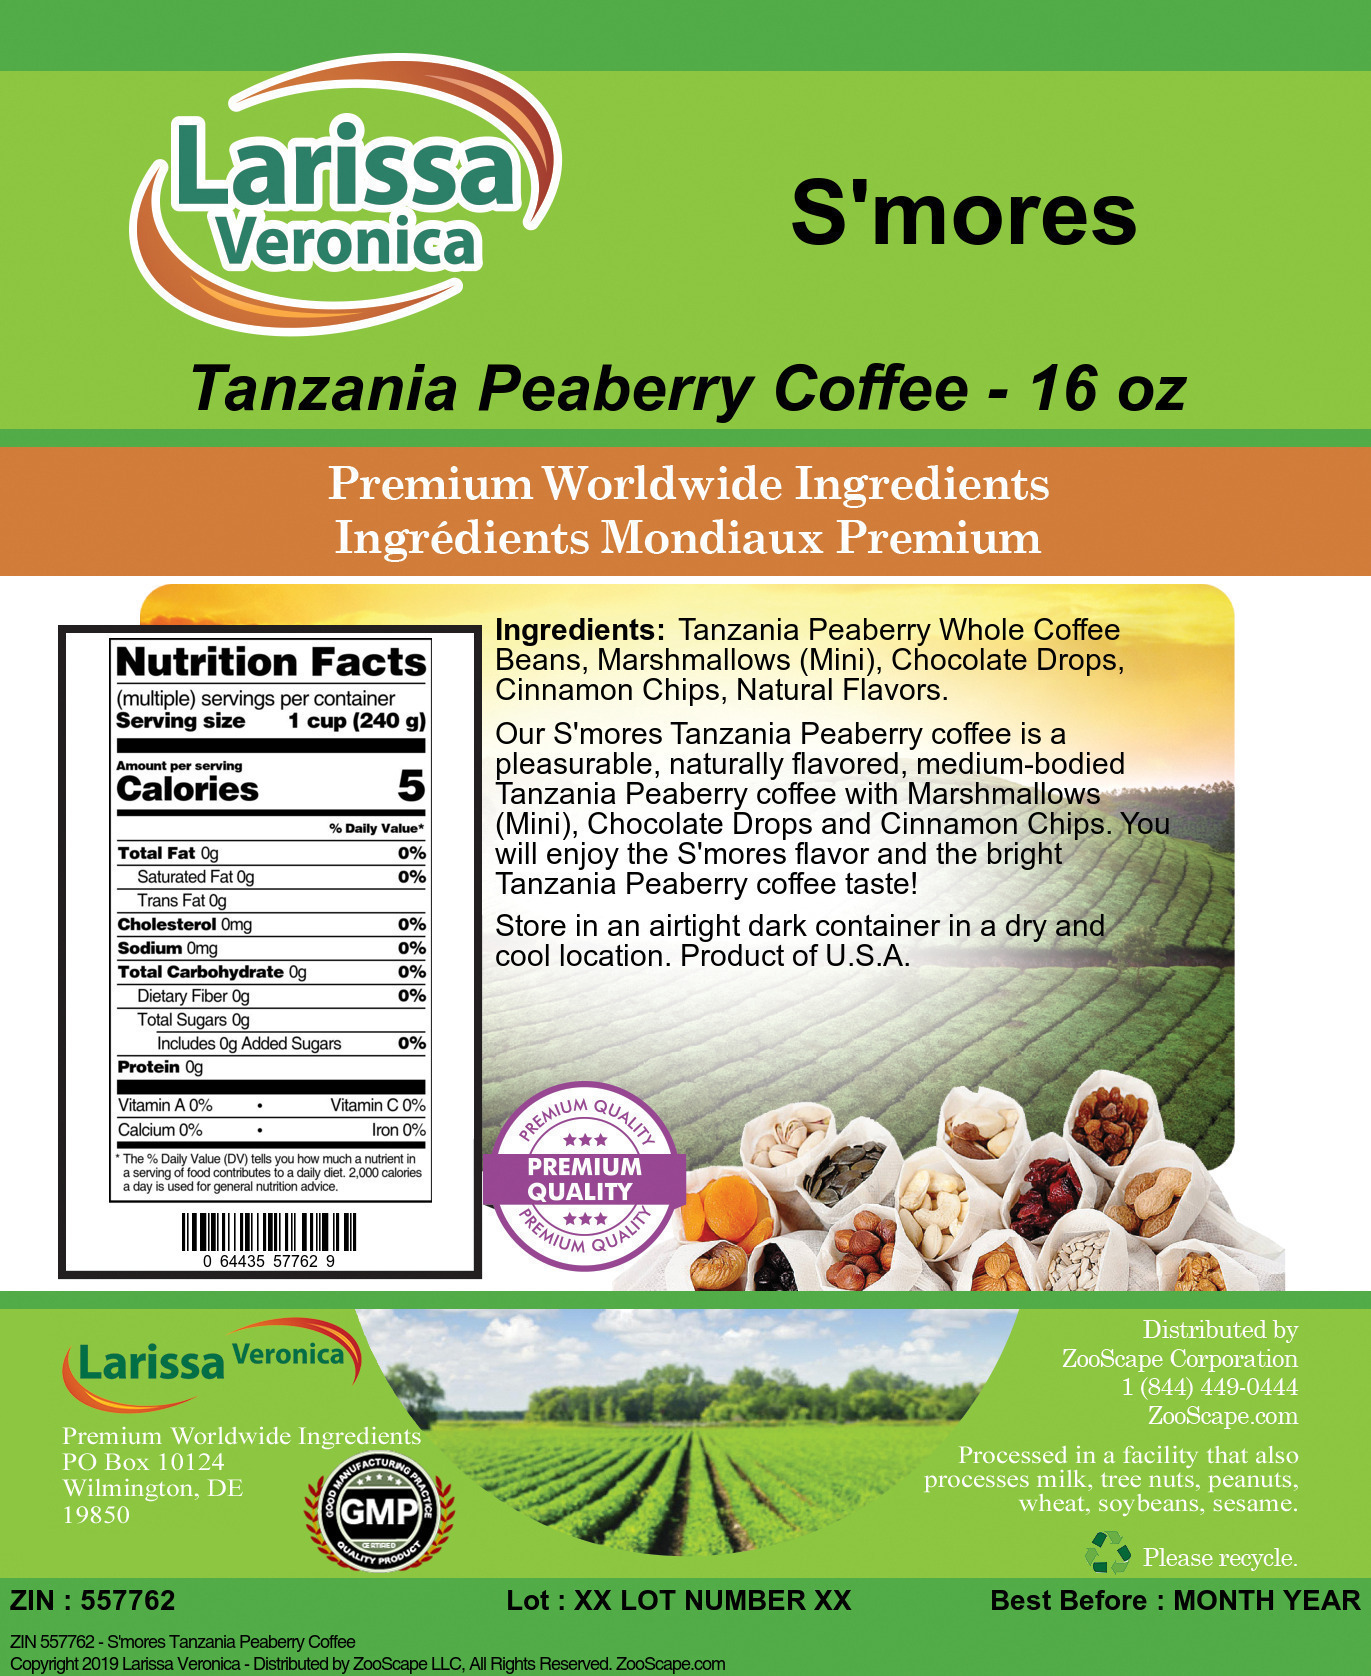 S'mores Tanzania Peaberry Coffee - Label